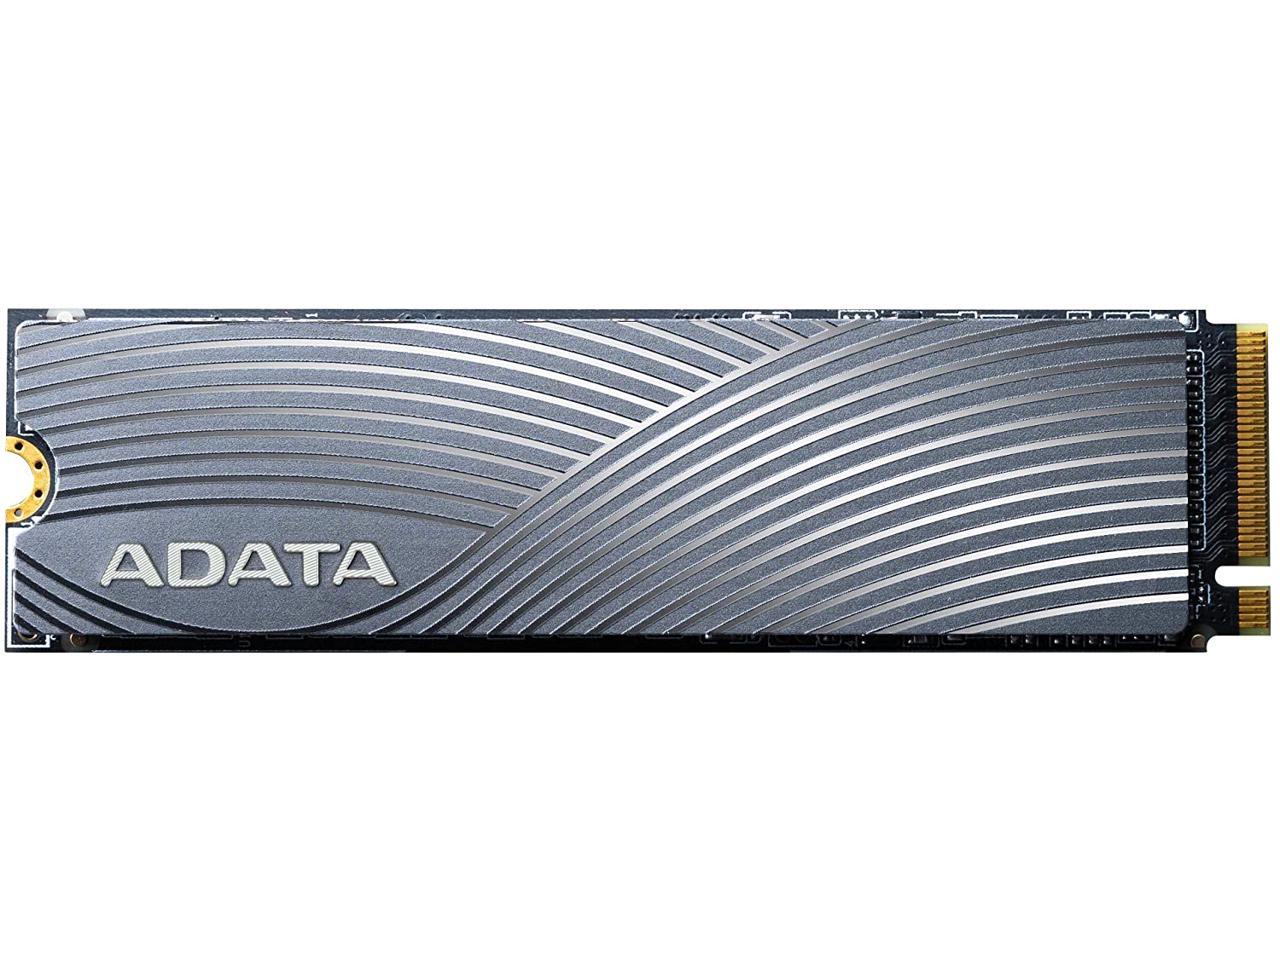 ADATA Swordfish Desktop |Laptop 500GG Internal PCIe Gen3x4 M.2 Solid State Drive